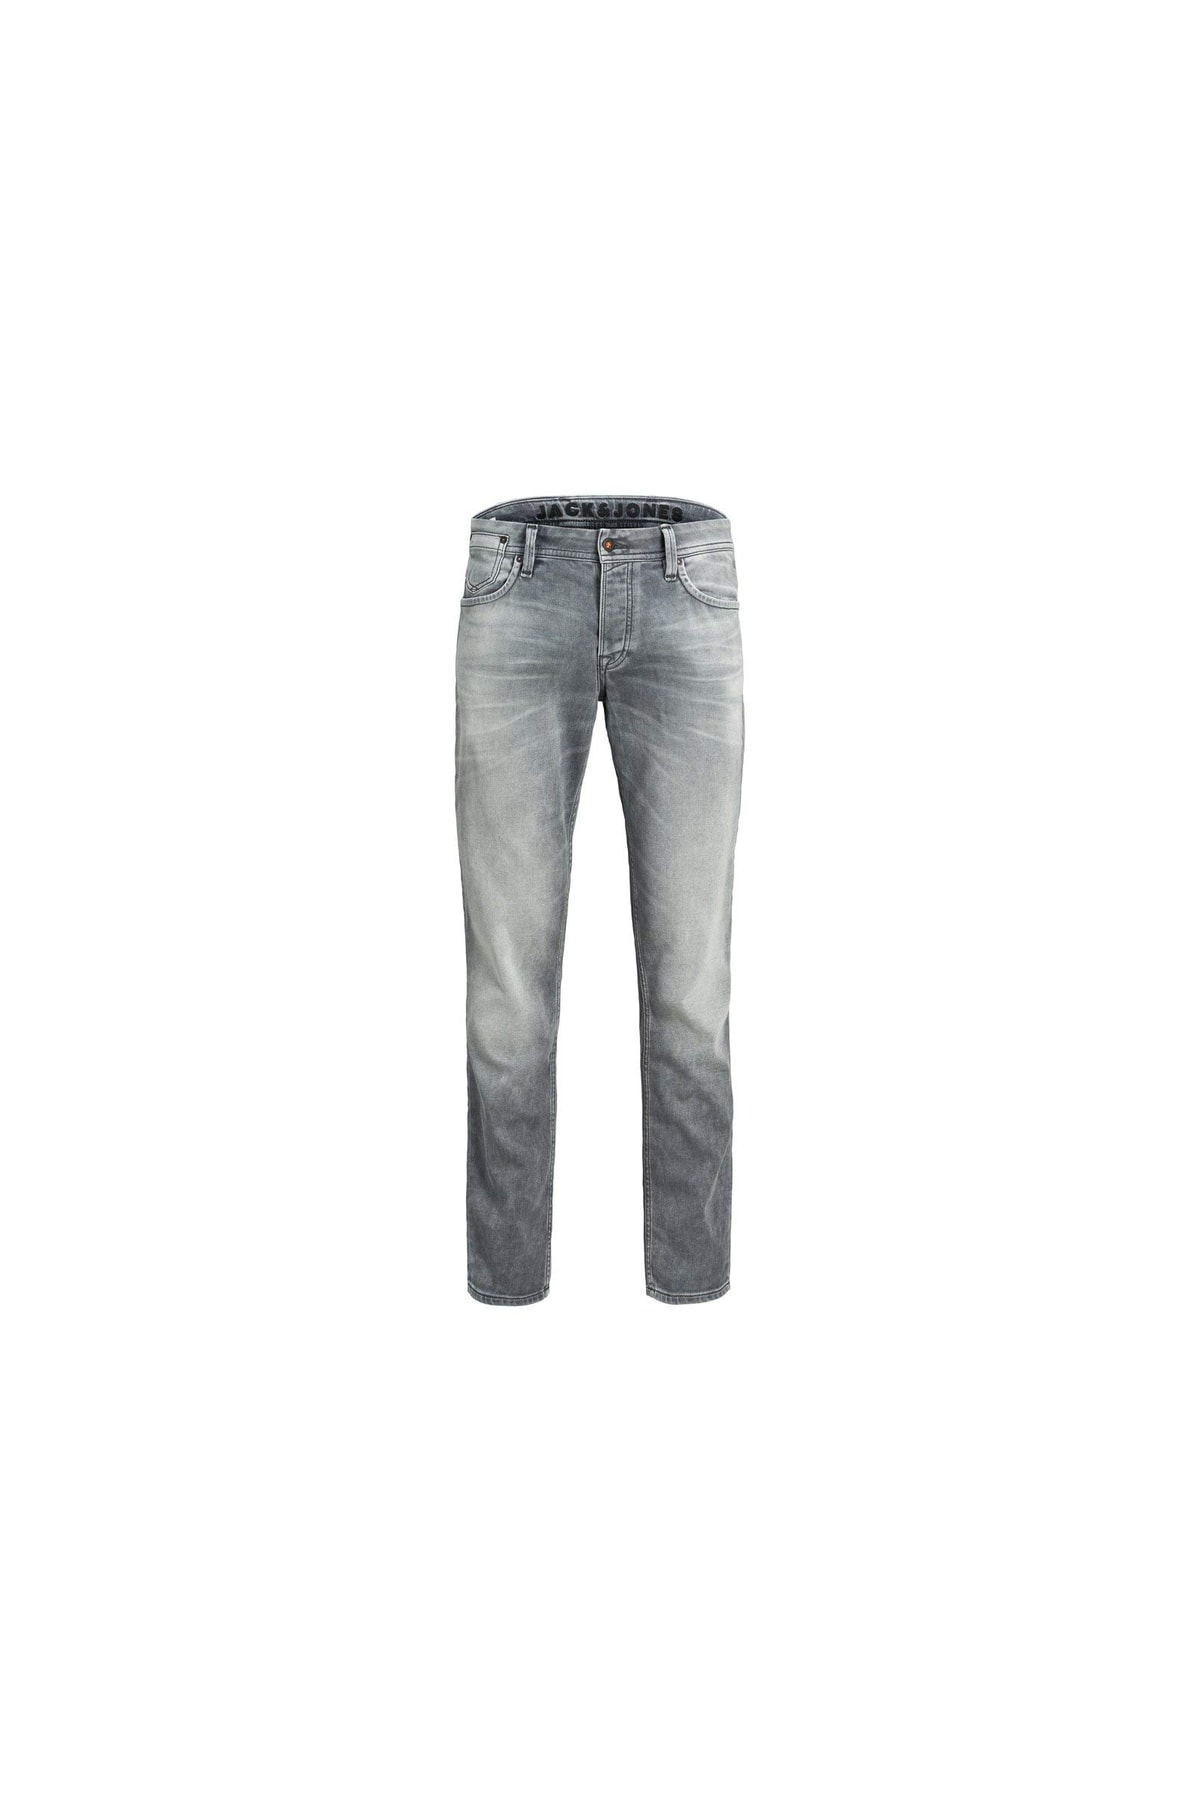 Jack & Jones Jeans Grau Straight Fast ausverkauft